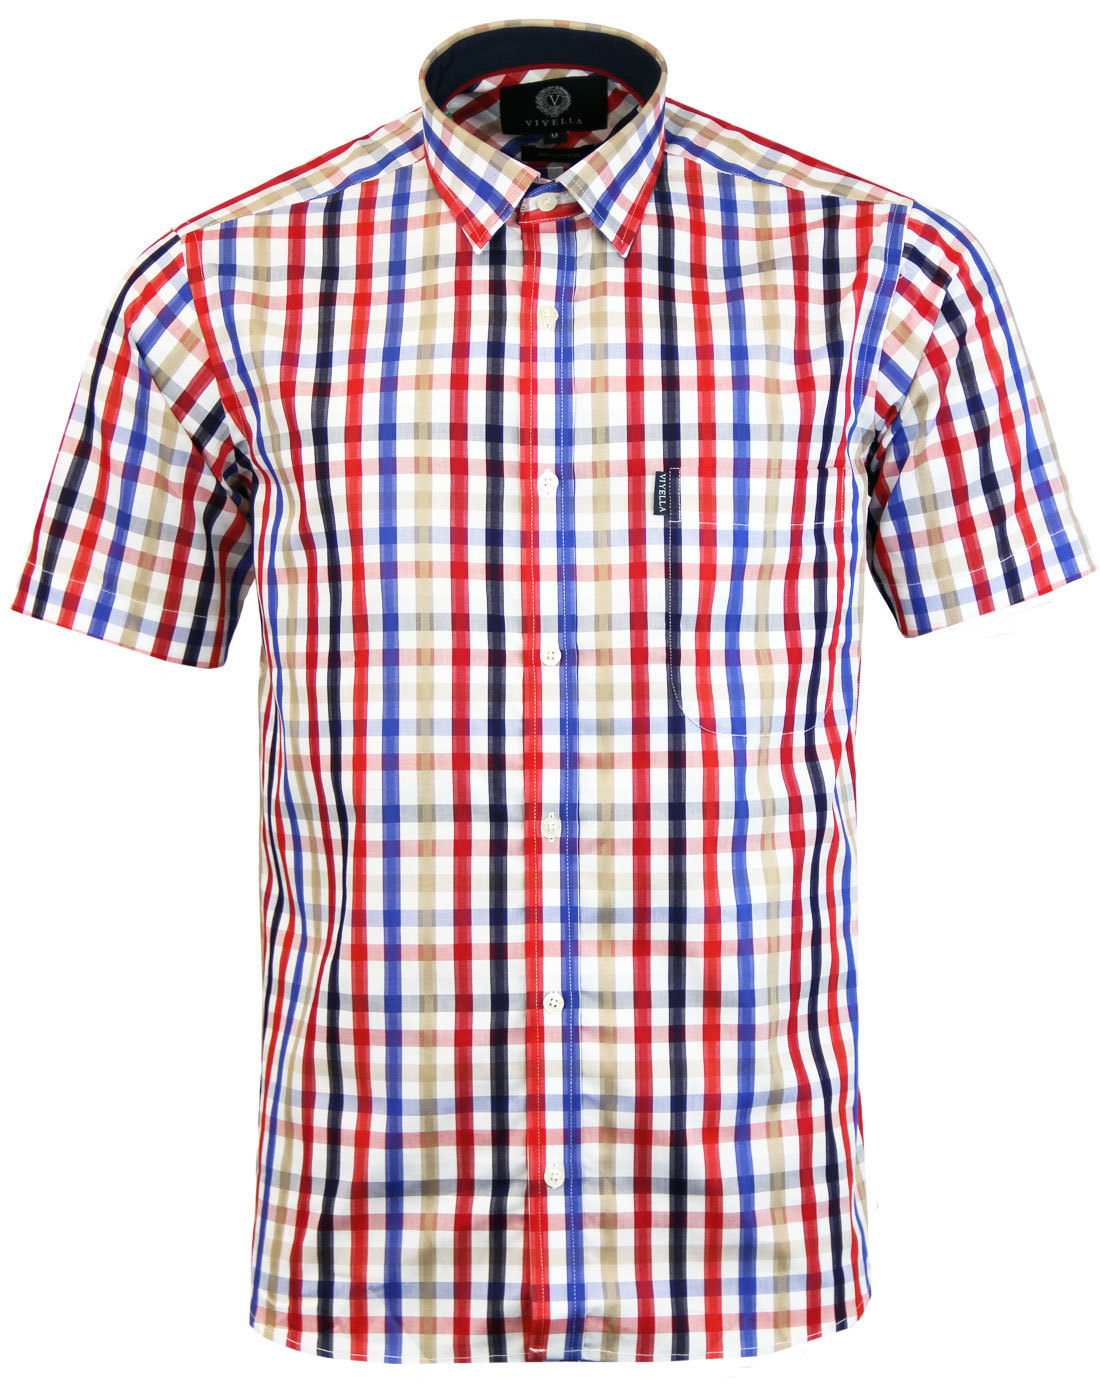 VIYELLA Men's Retro 1960s Mod Satin Check Short Sleeve Shirt Red